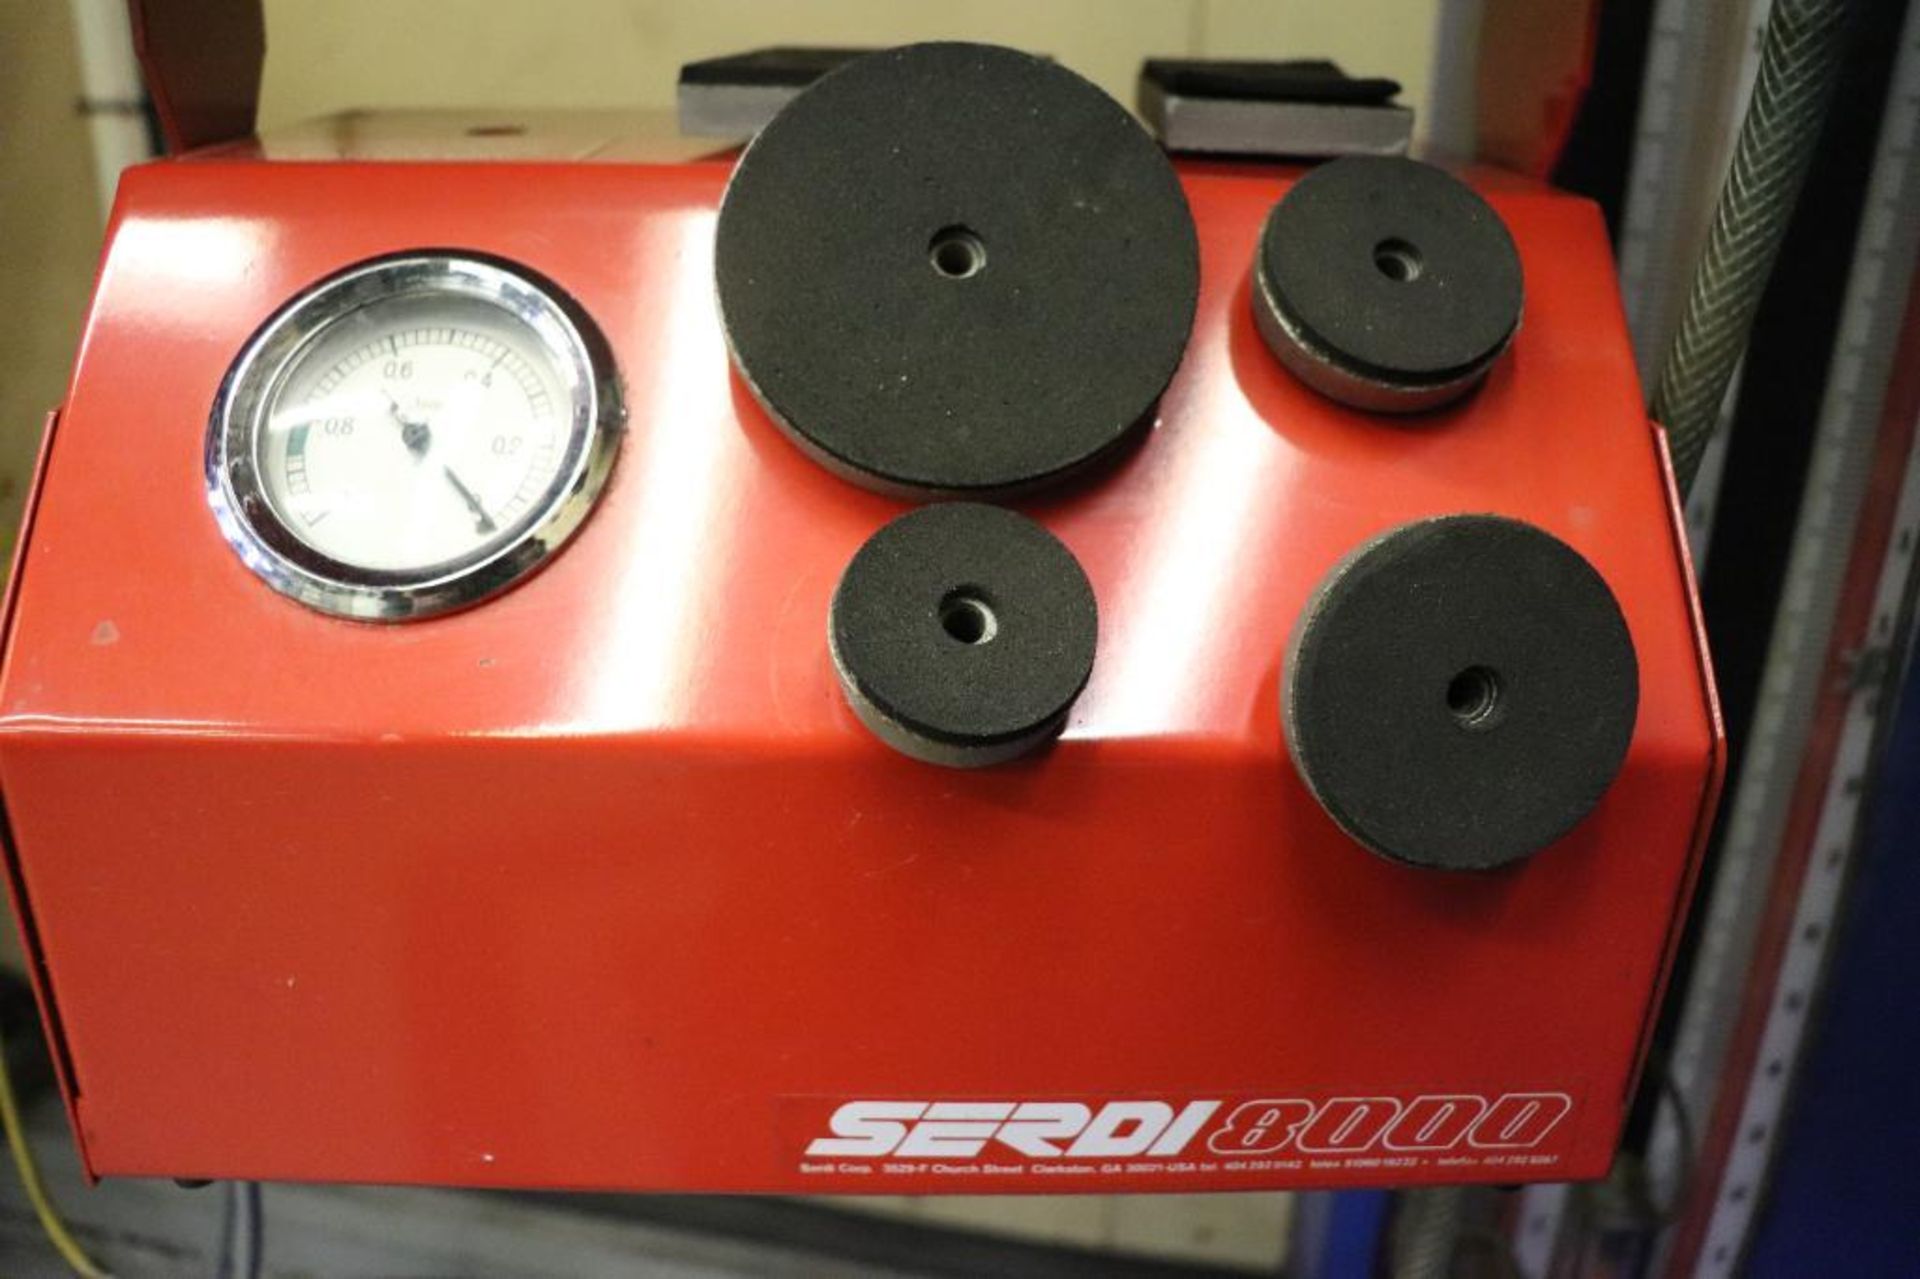 Serdi 100 valve seat cutting machine - Image 18 of 23